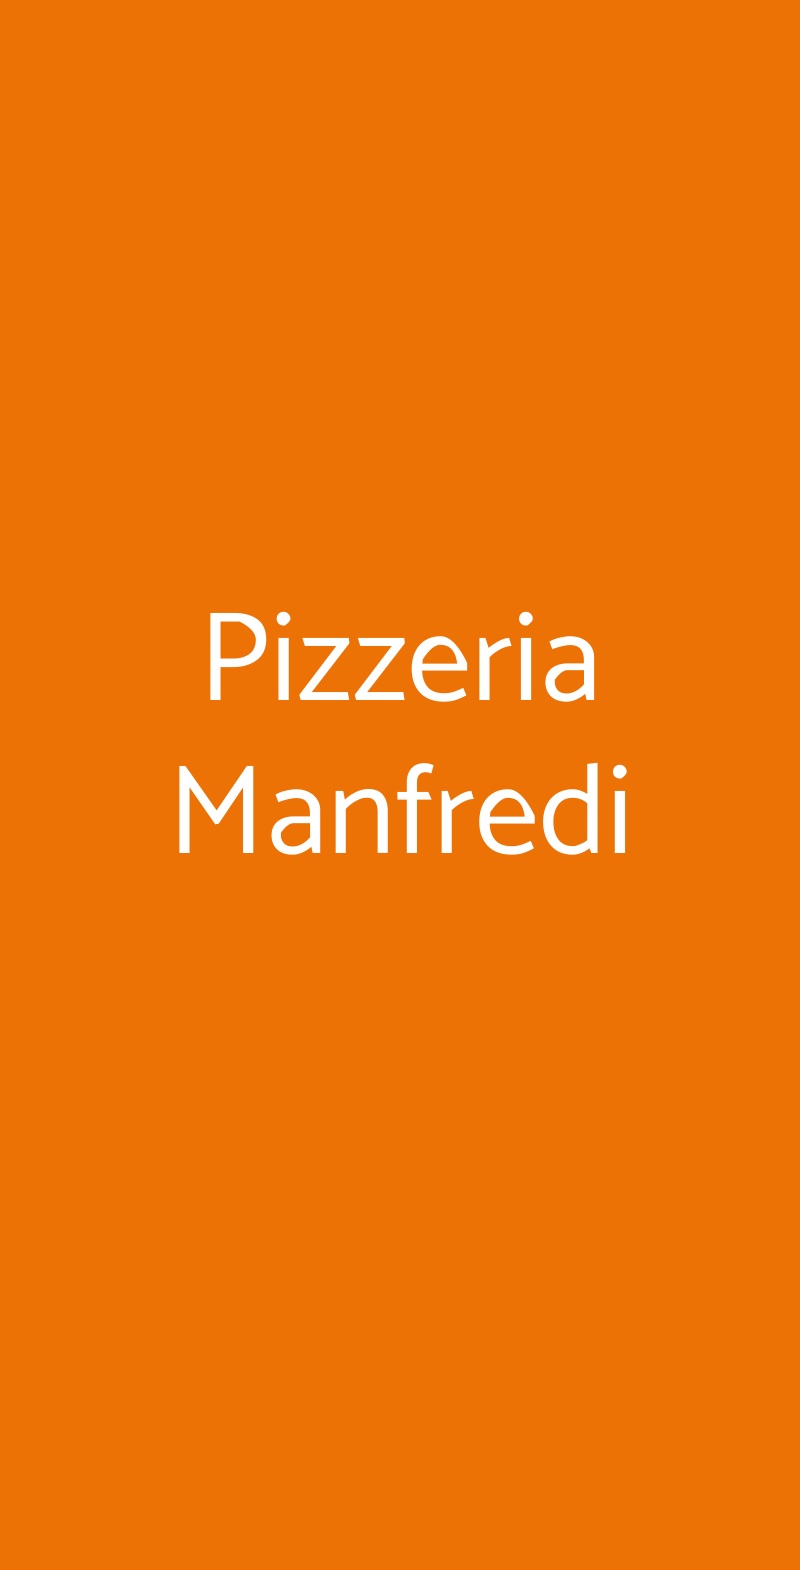 Pizzeria Manfredi Napoli menù 1 pagina